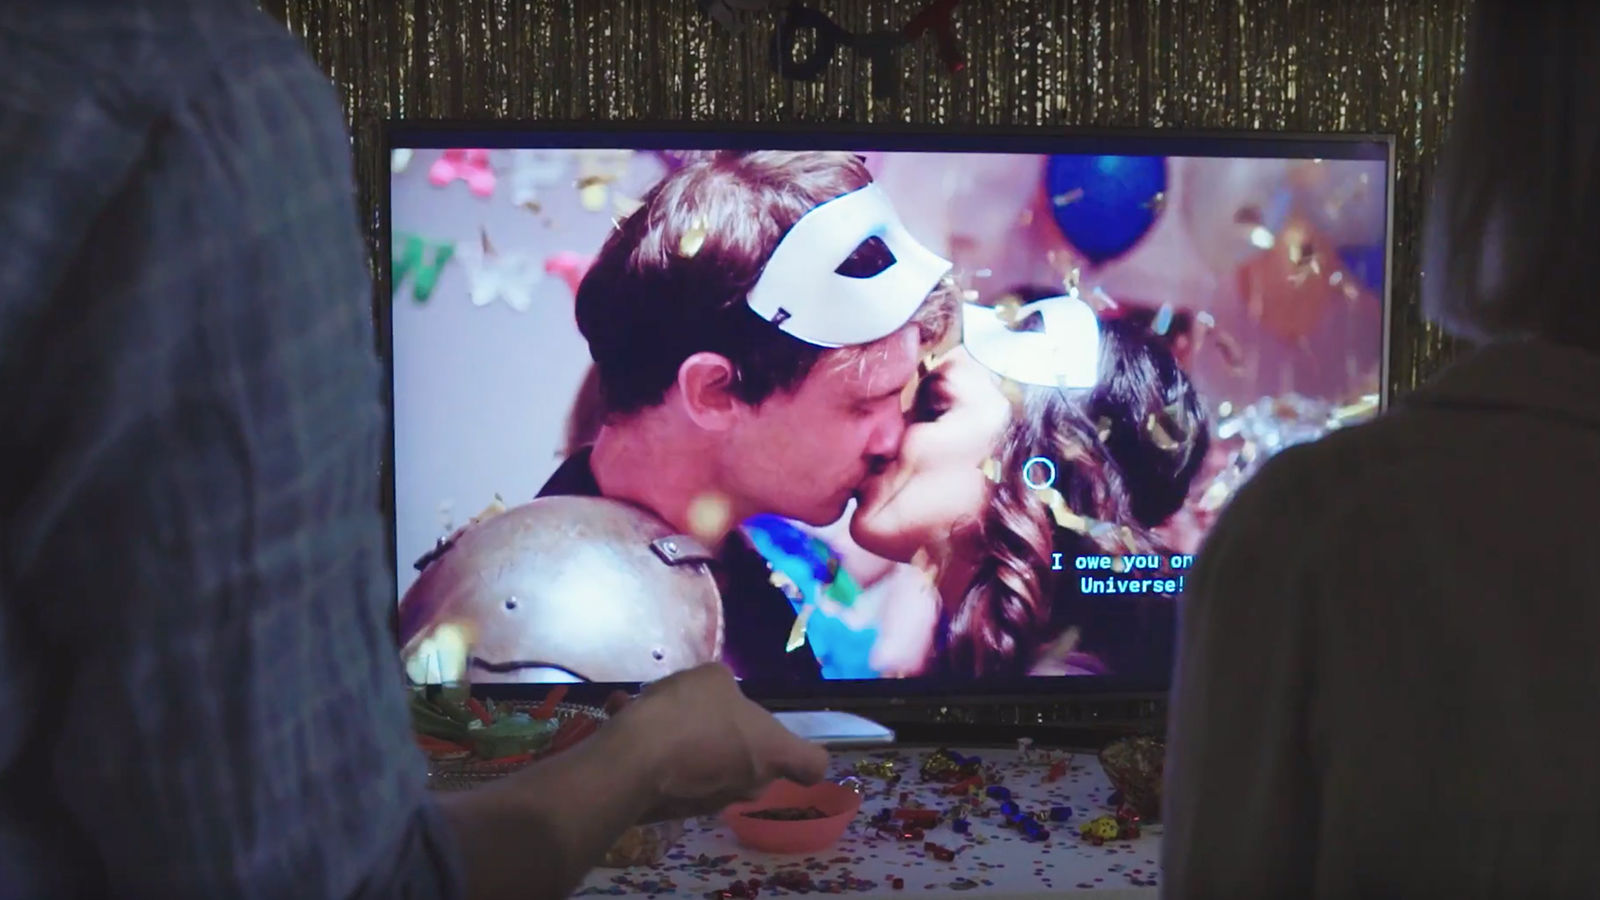 A couple kiss on screen.